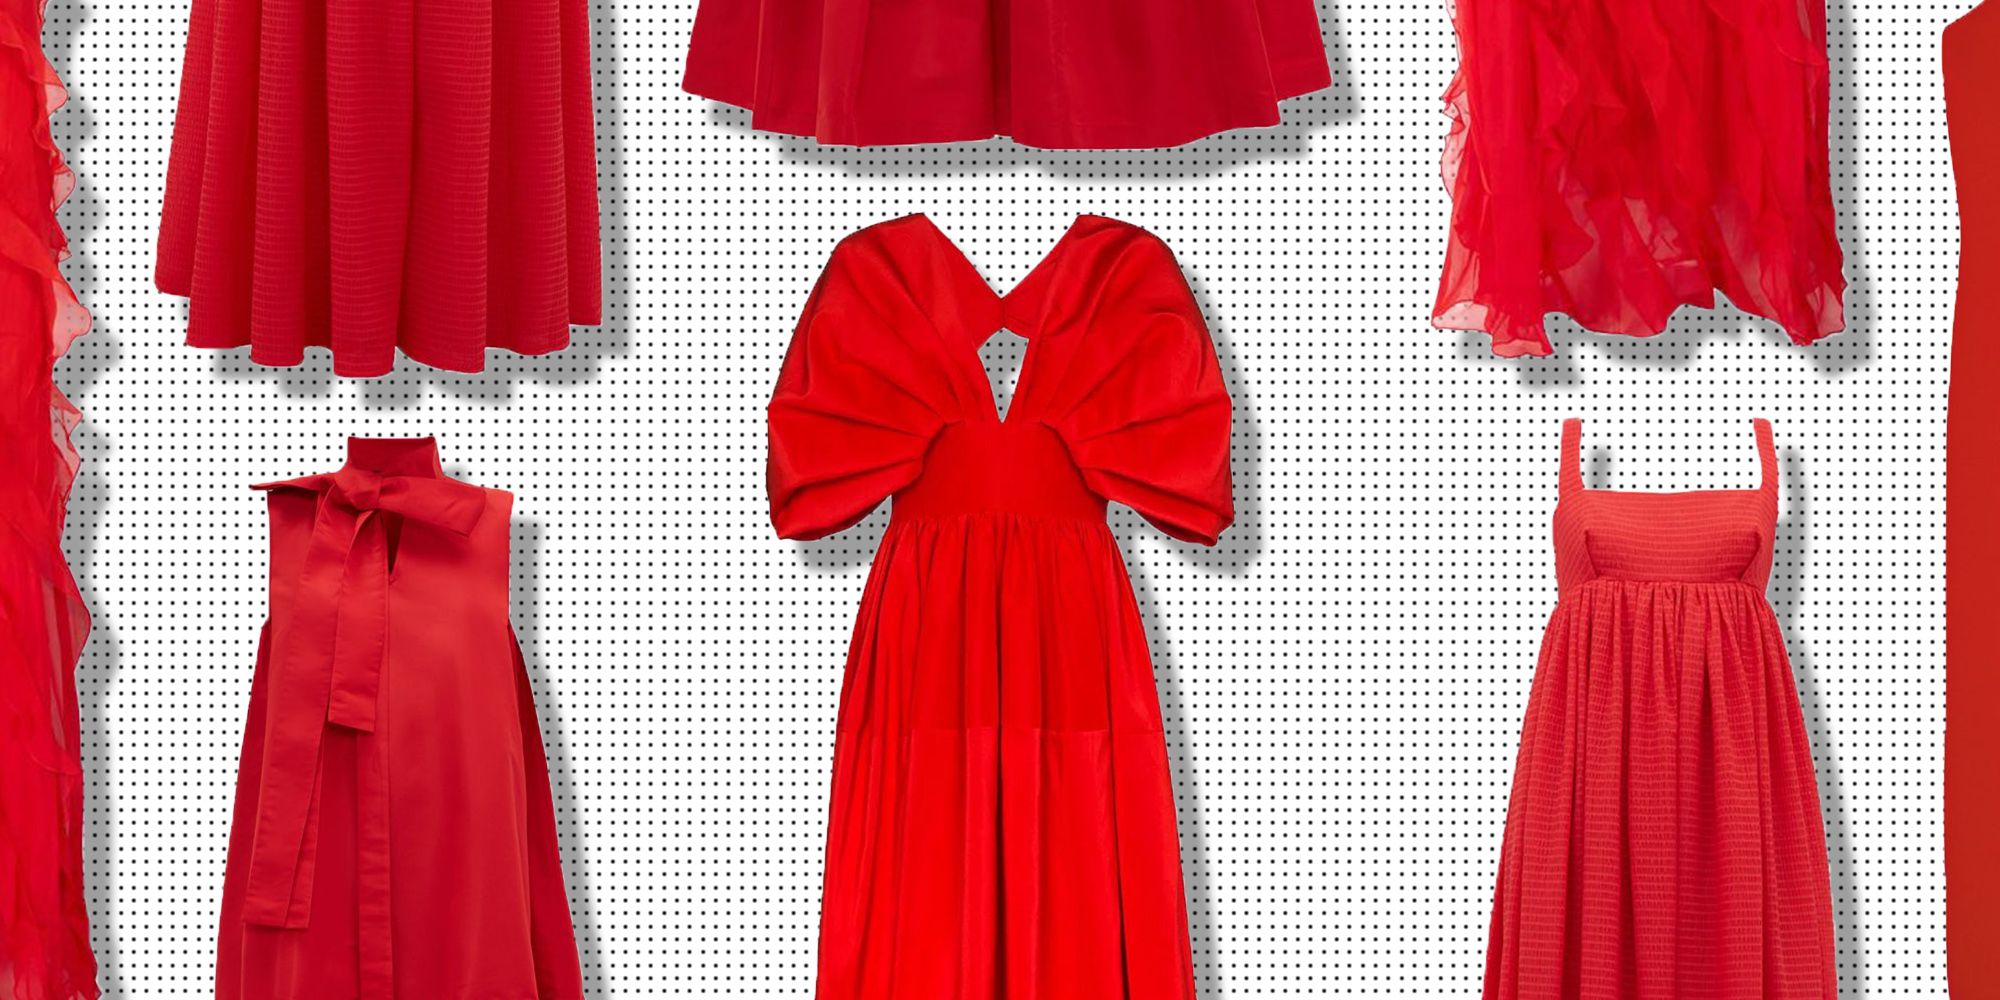 Red-Dresses